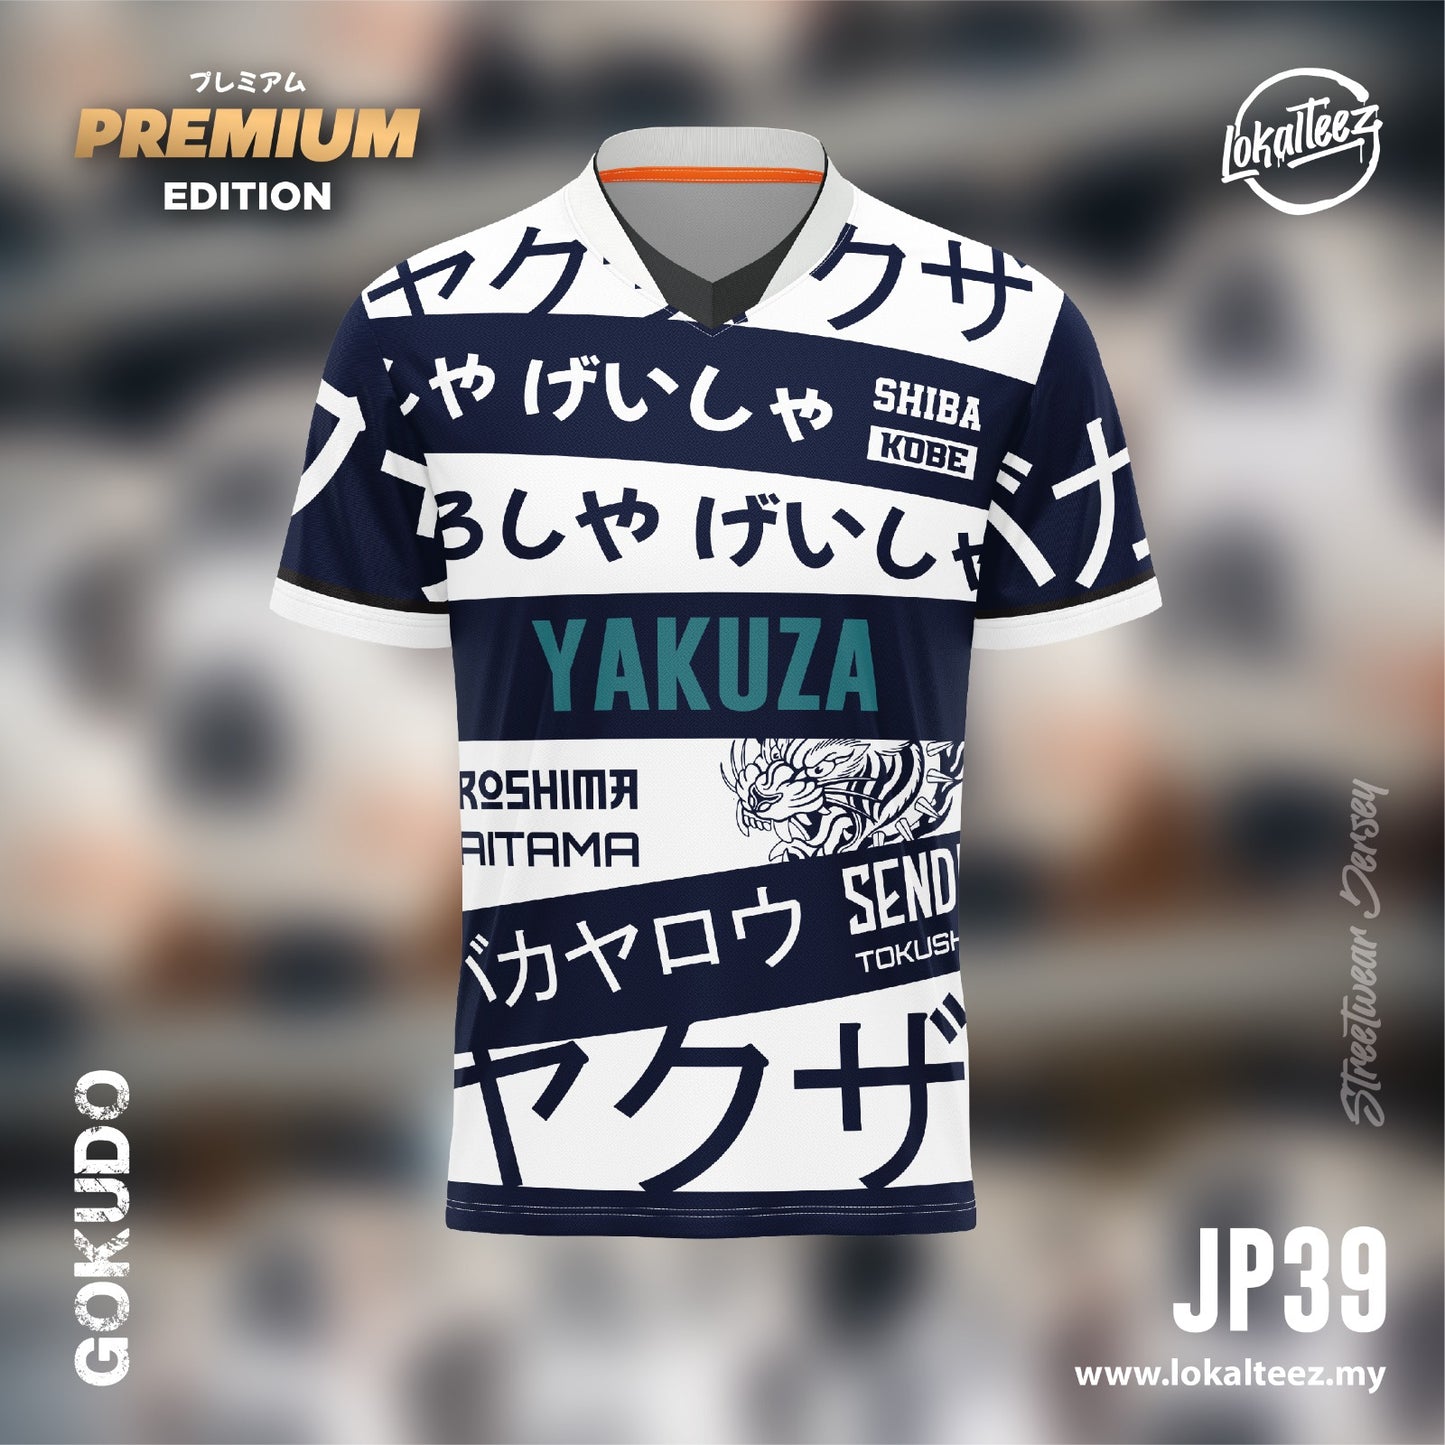 JP39 Japanese PREMIUM Edition GOKUDO